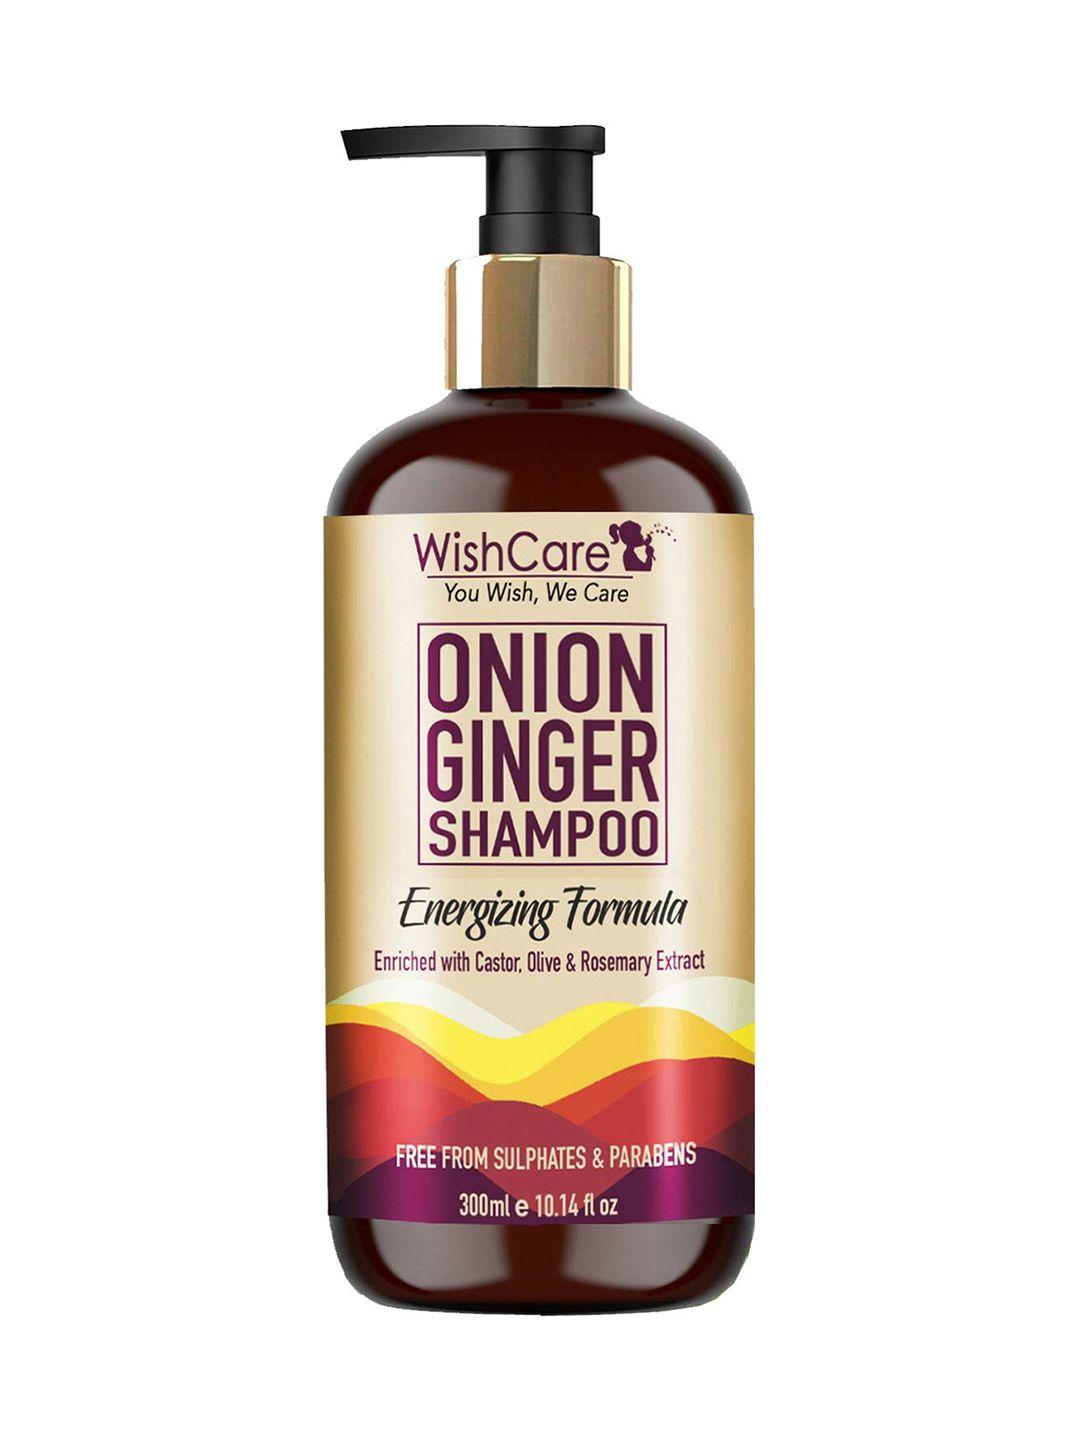 wishcare onion ginger shampoo - strengthening formula - for all hair types 300 ml